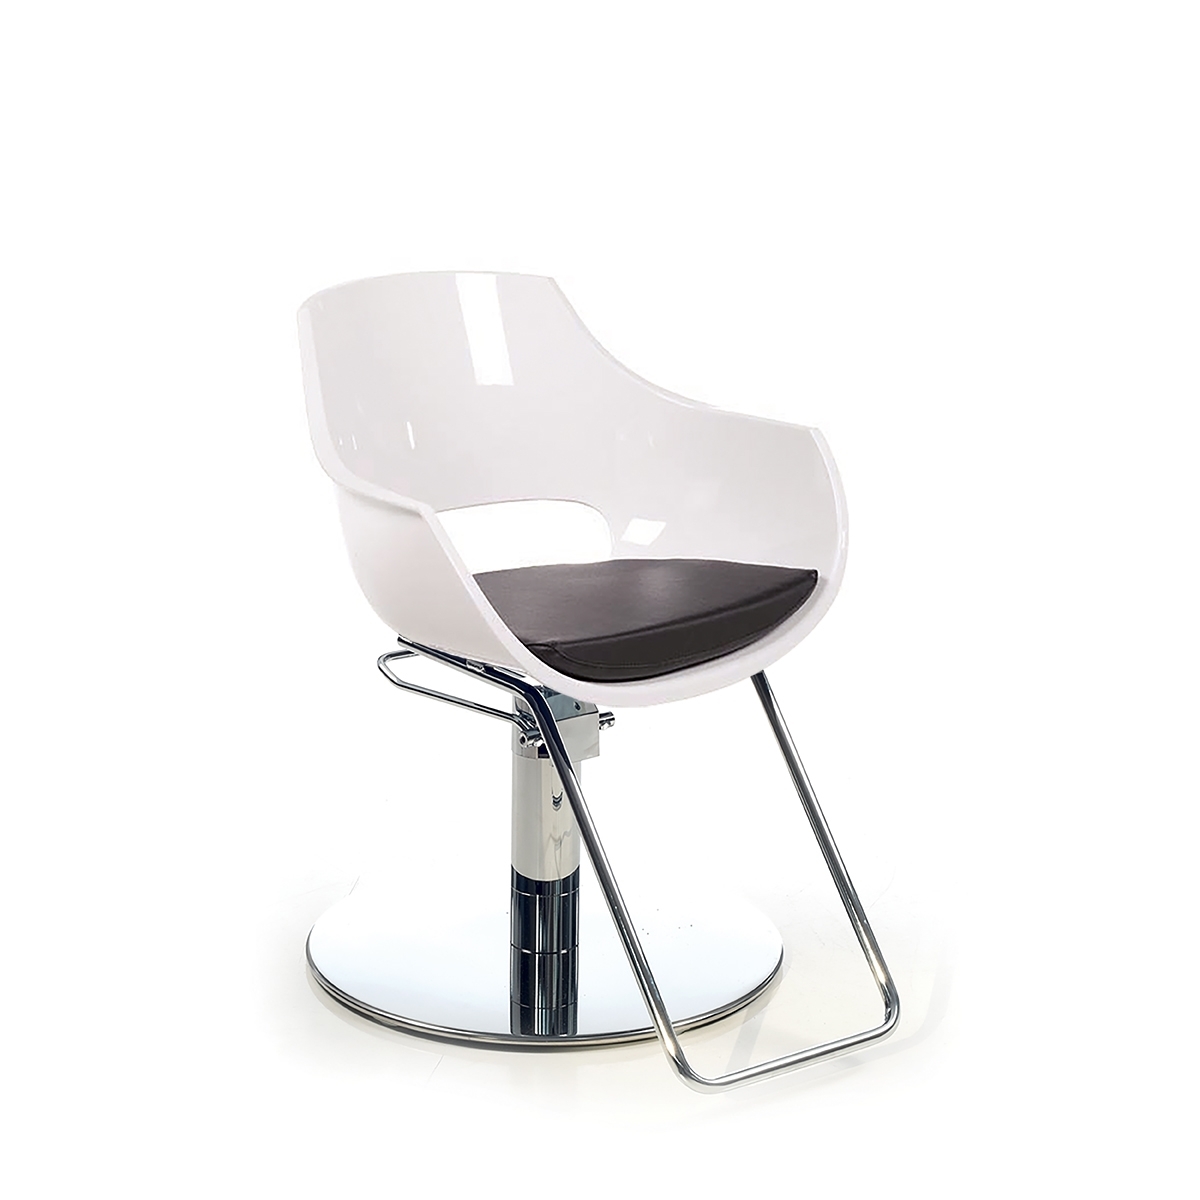 Clara Styling Chair by Gamma & Bross Spa